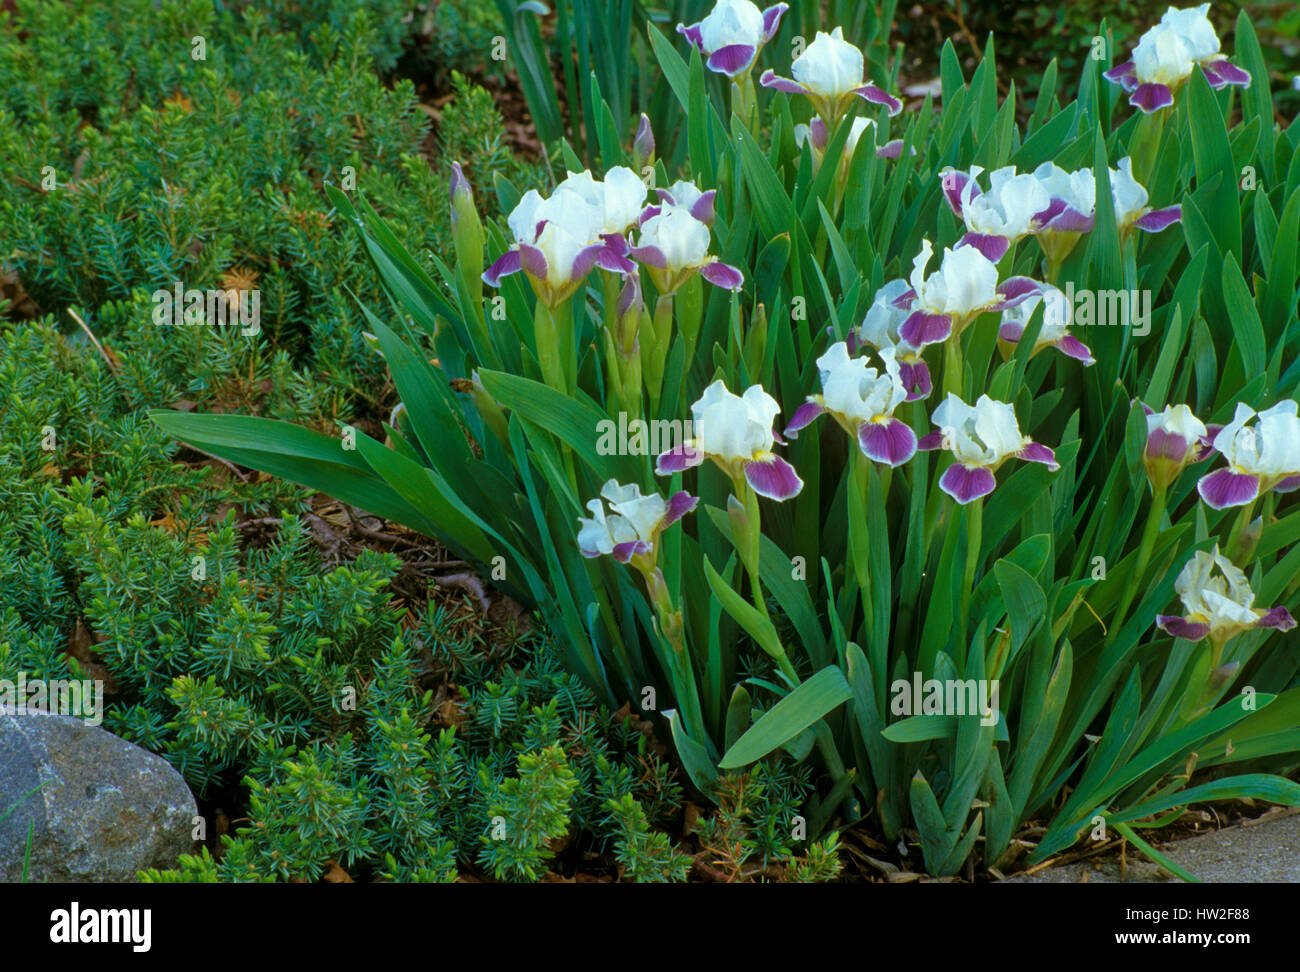 Dwarf Iris ' Making Eyes' in garden Stock Photo